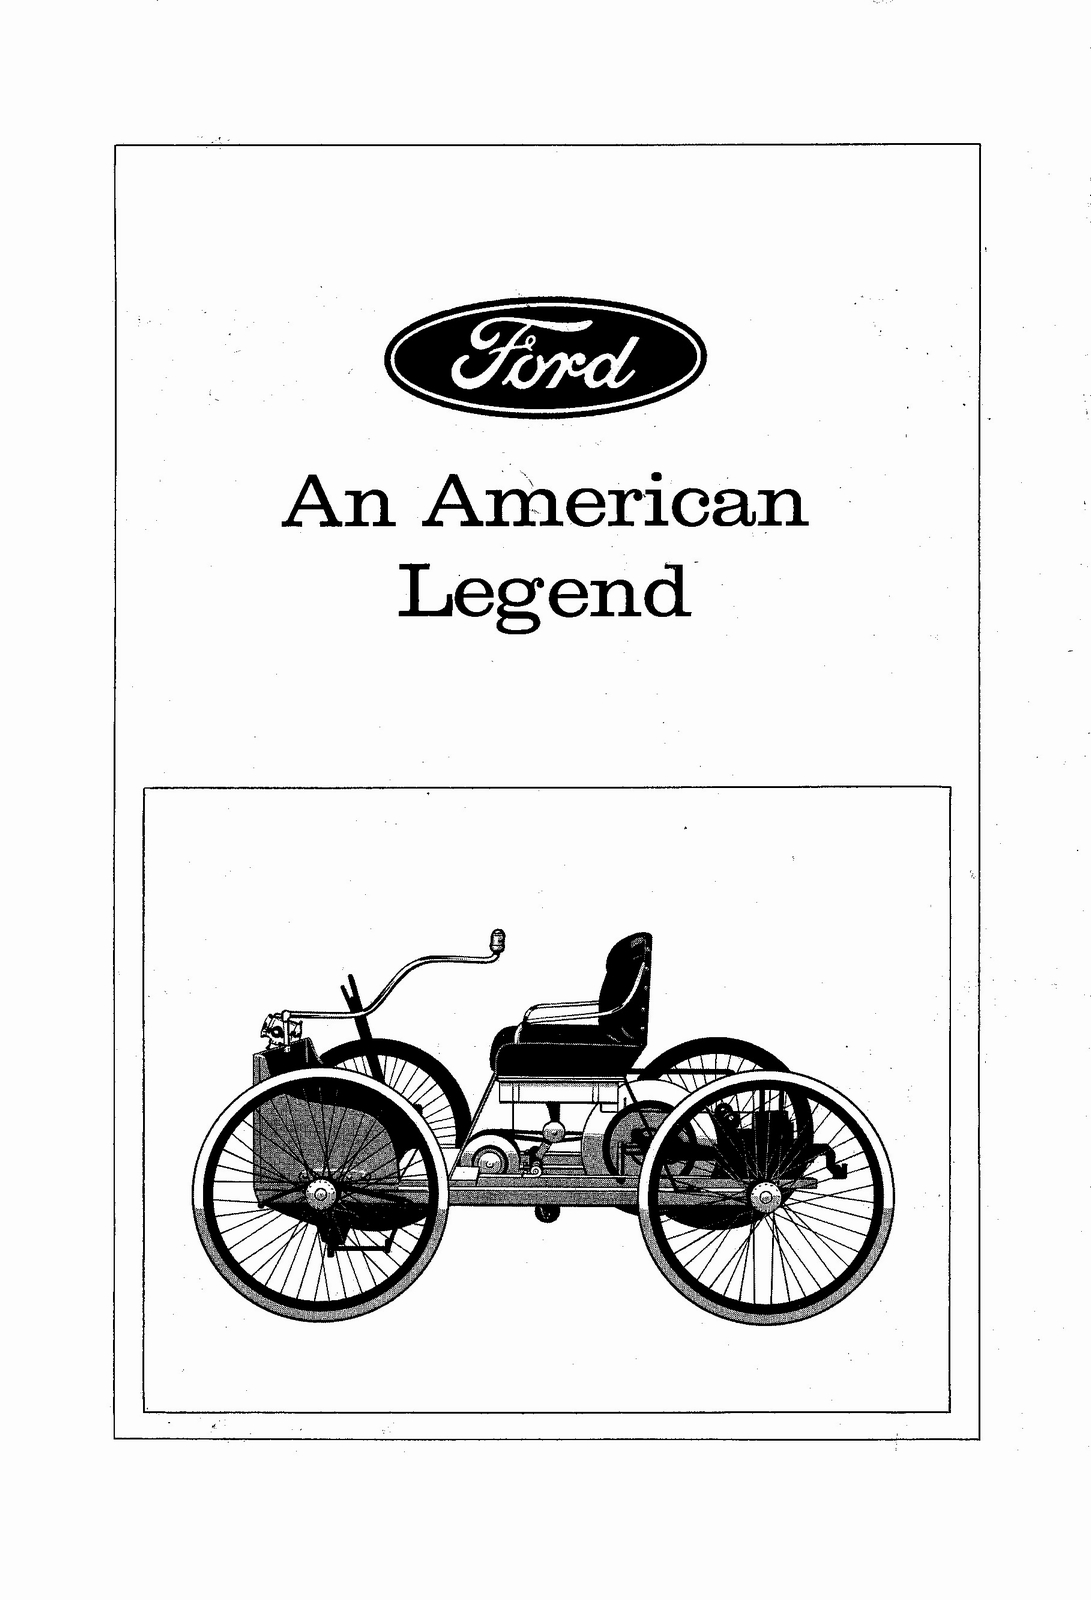 n_1967-Ford an American Legend-01.jpg